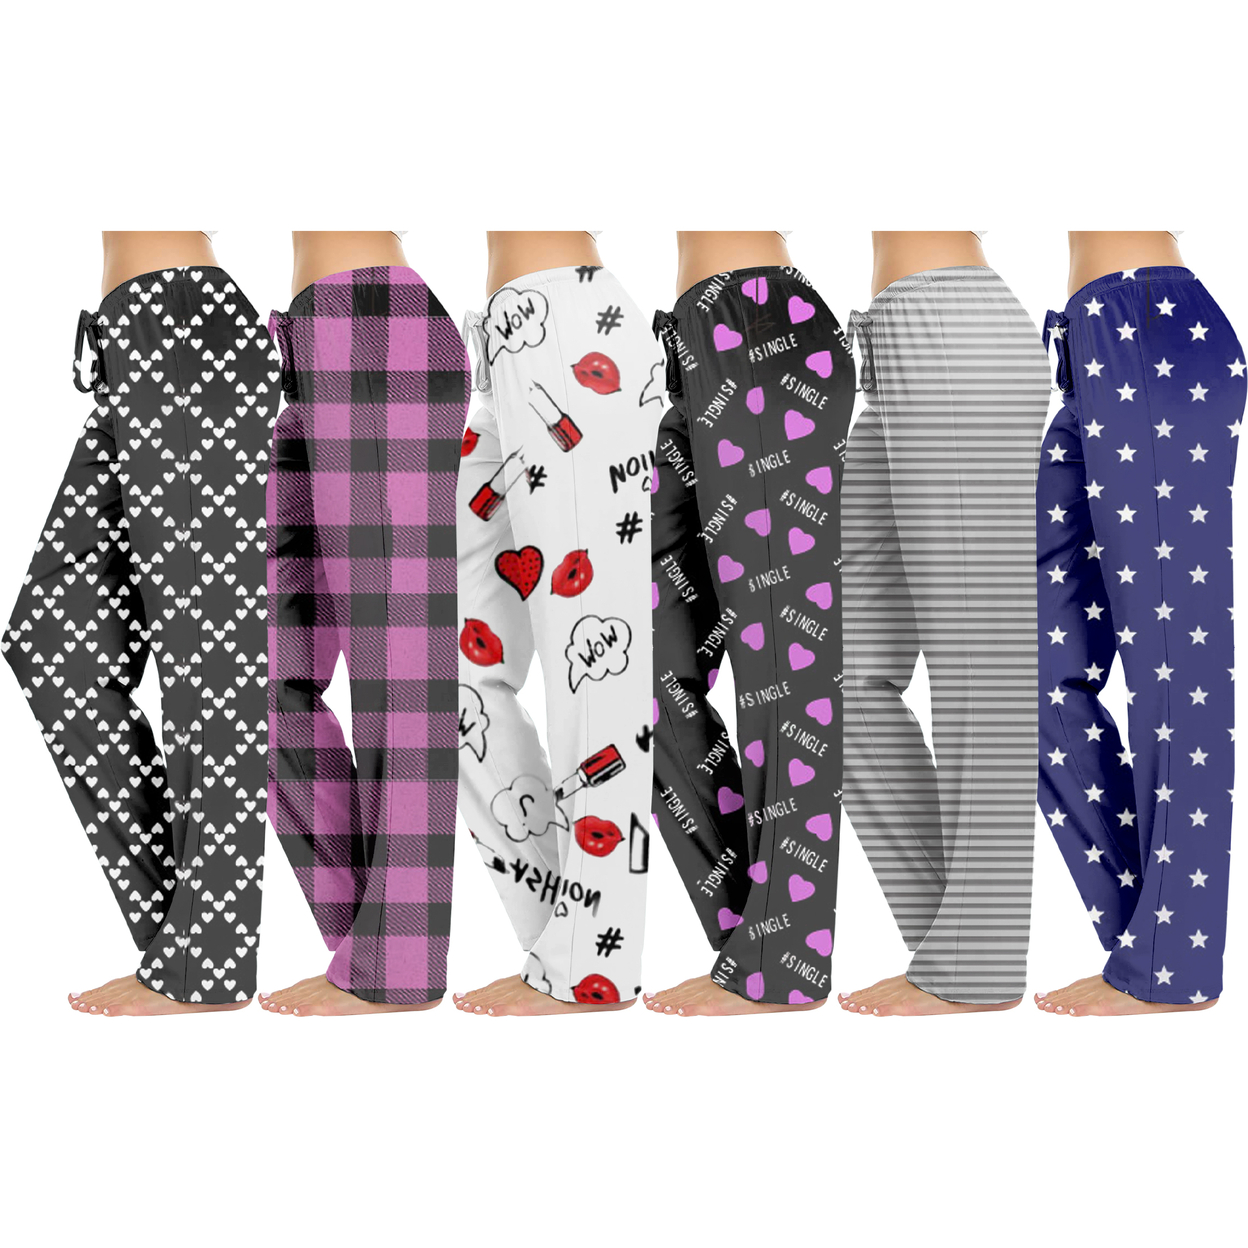 5-Pack: Women's Casual Fun Printed Lightweight Lounge Terry Knit Pajama Bottom Pants - Medium, Animal